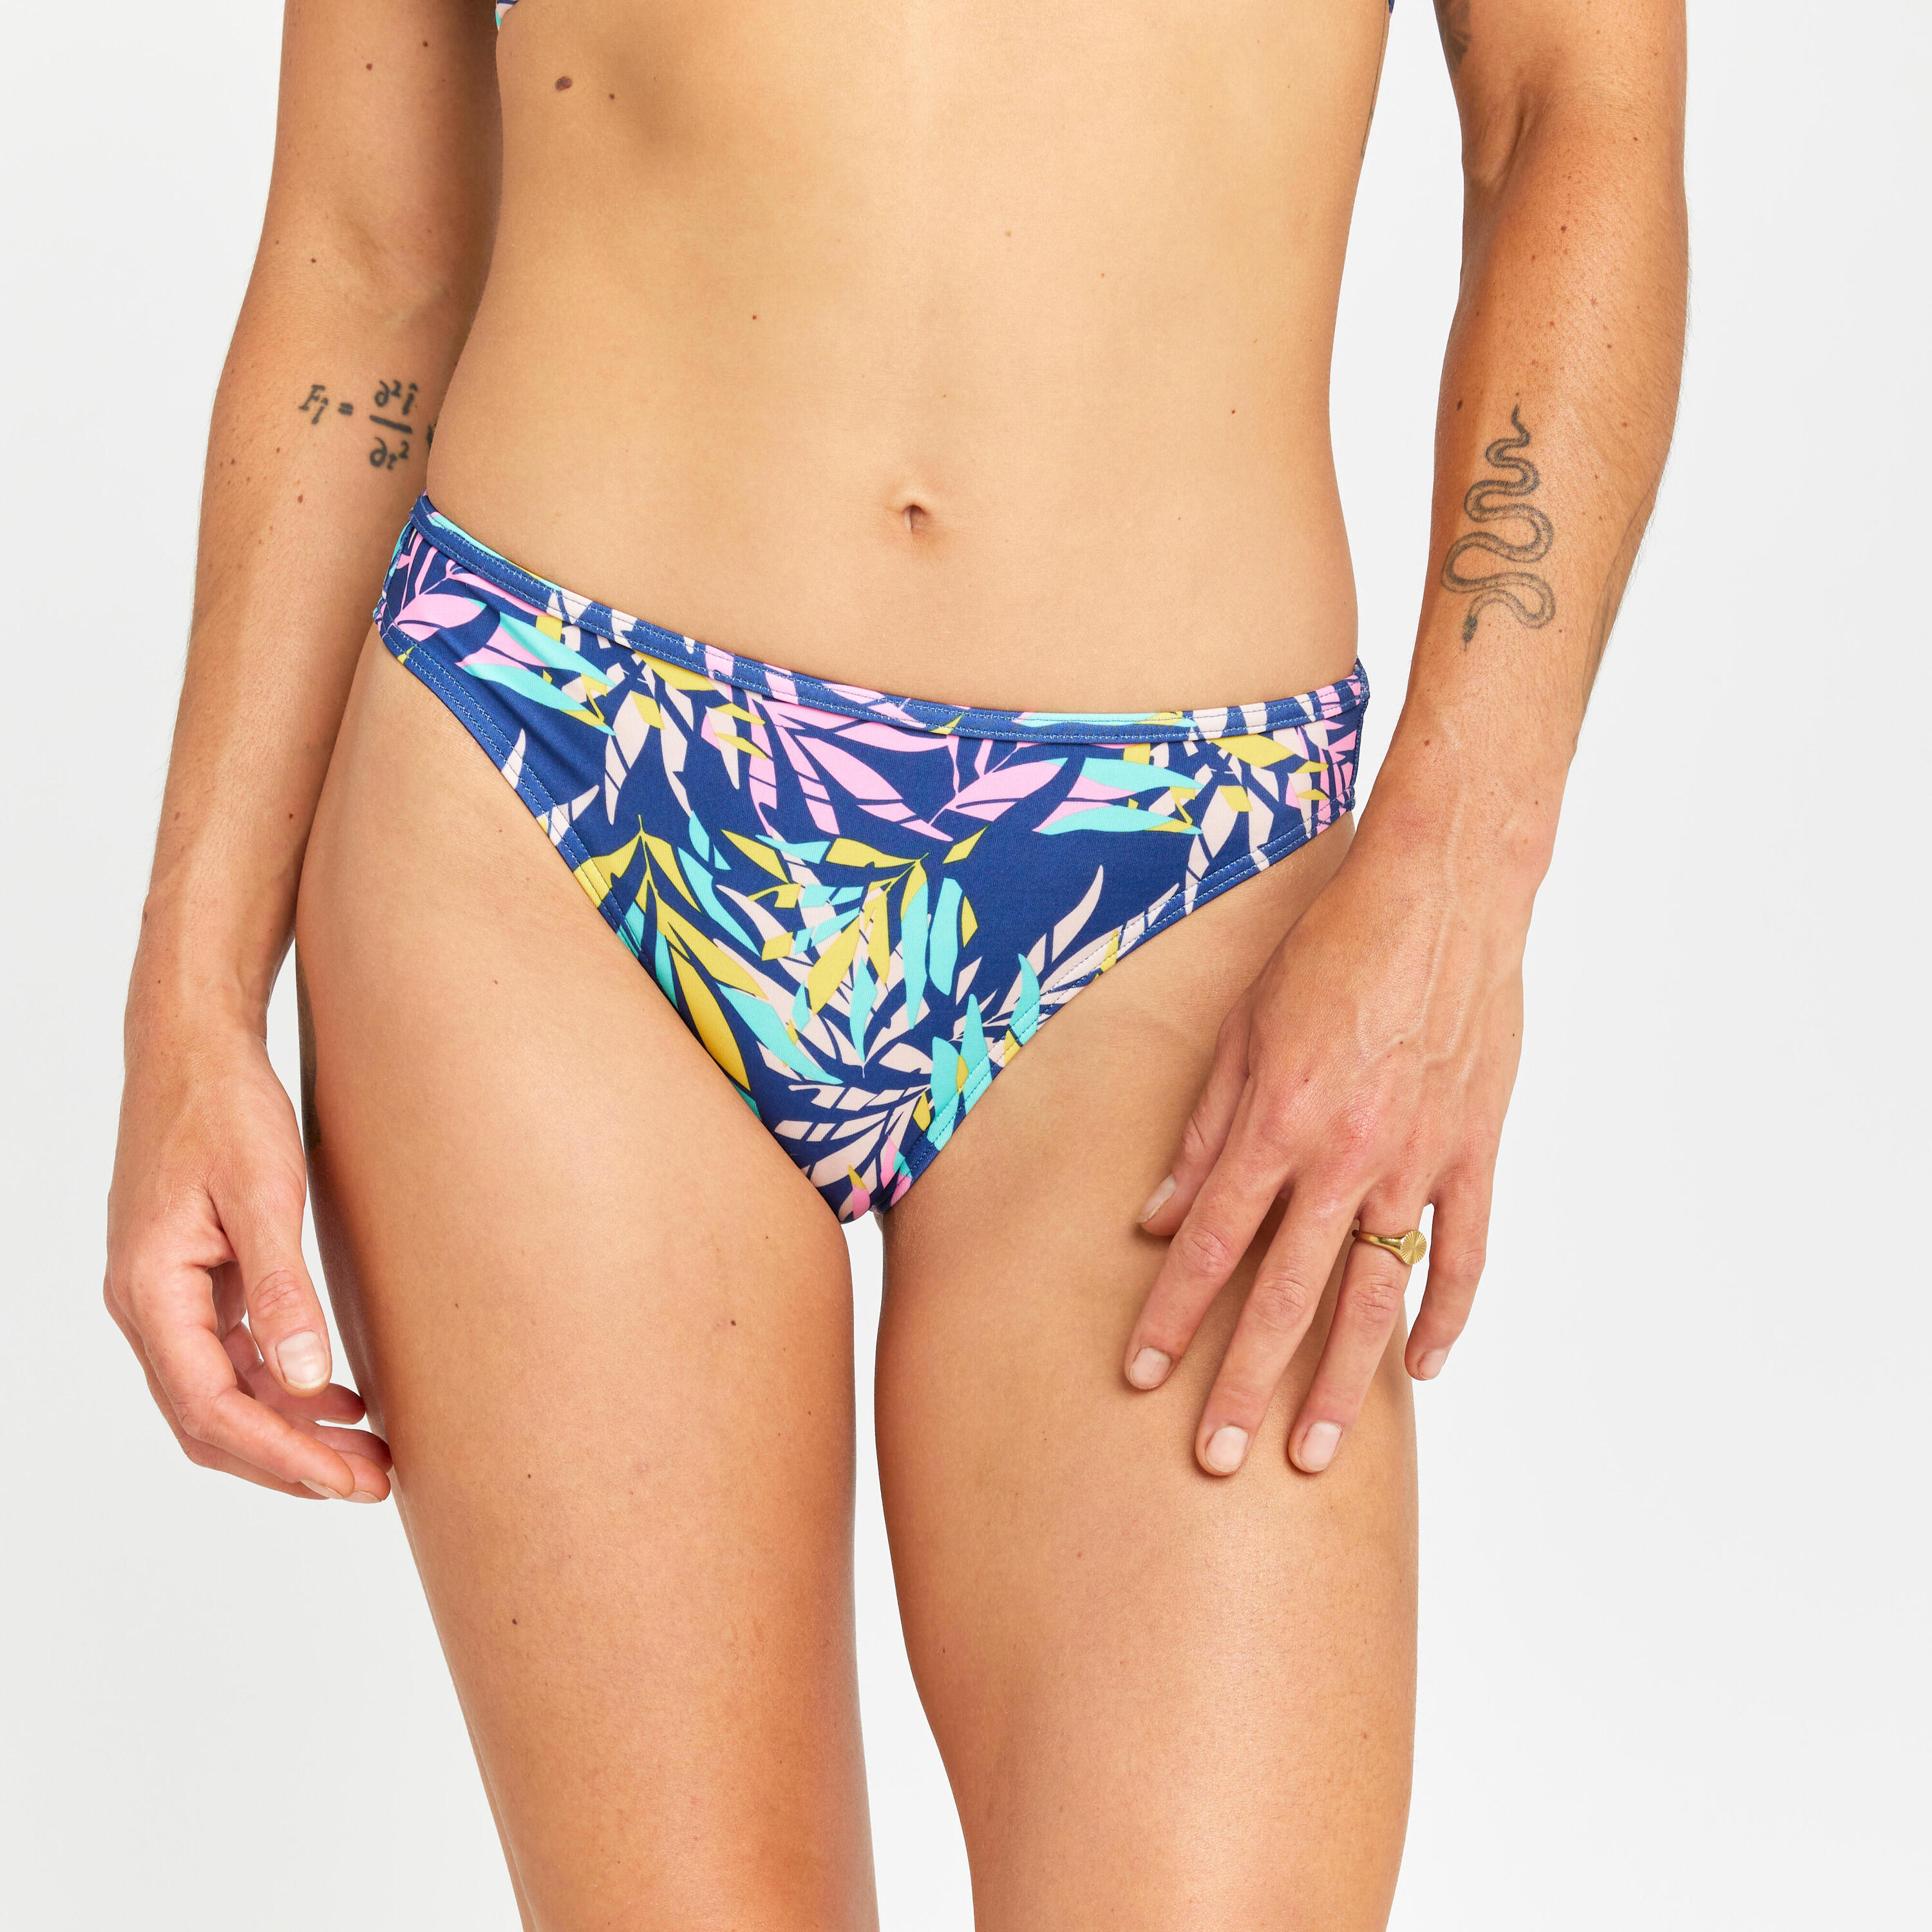 Women's briefs swimsuit bottoms - Nina cuty blue 2/4